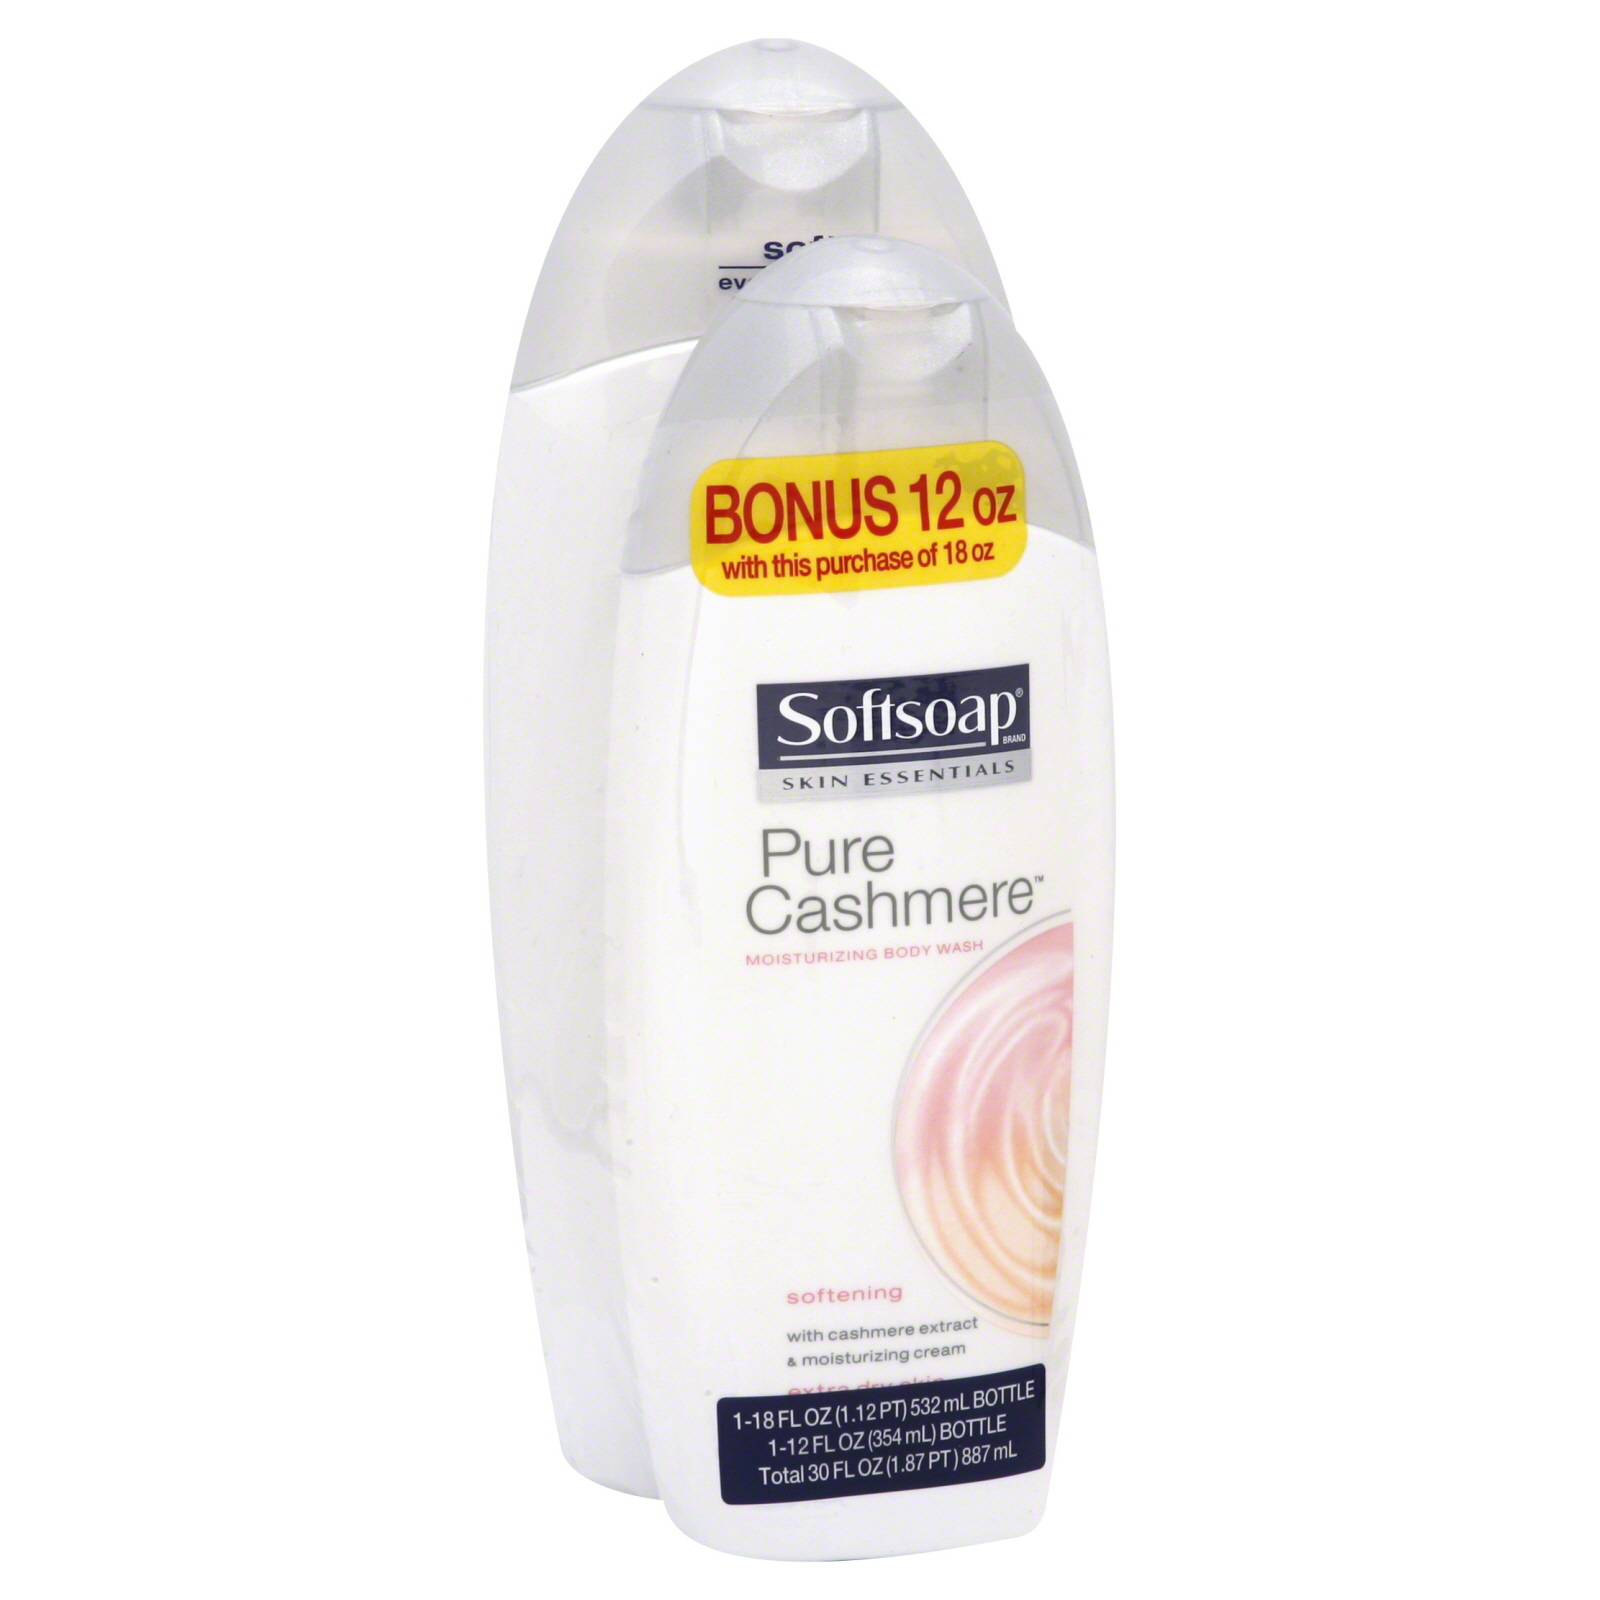 Softsoap Pure Cashmere Moisturizing Body Wash, Extra Dry Skin, 18 oz (1.12 pt) 532 ml